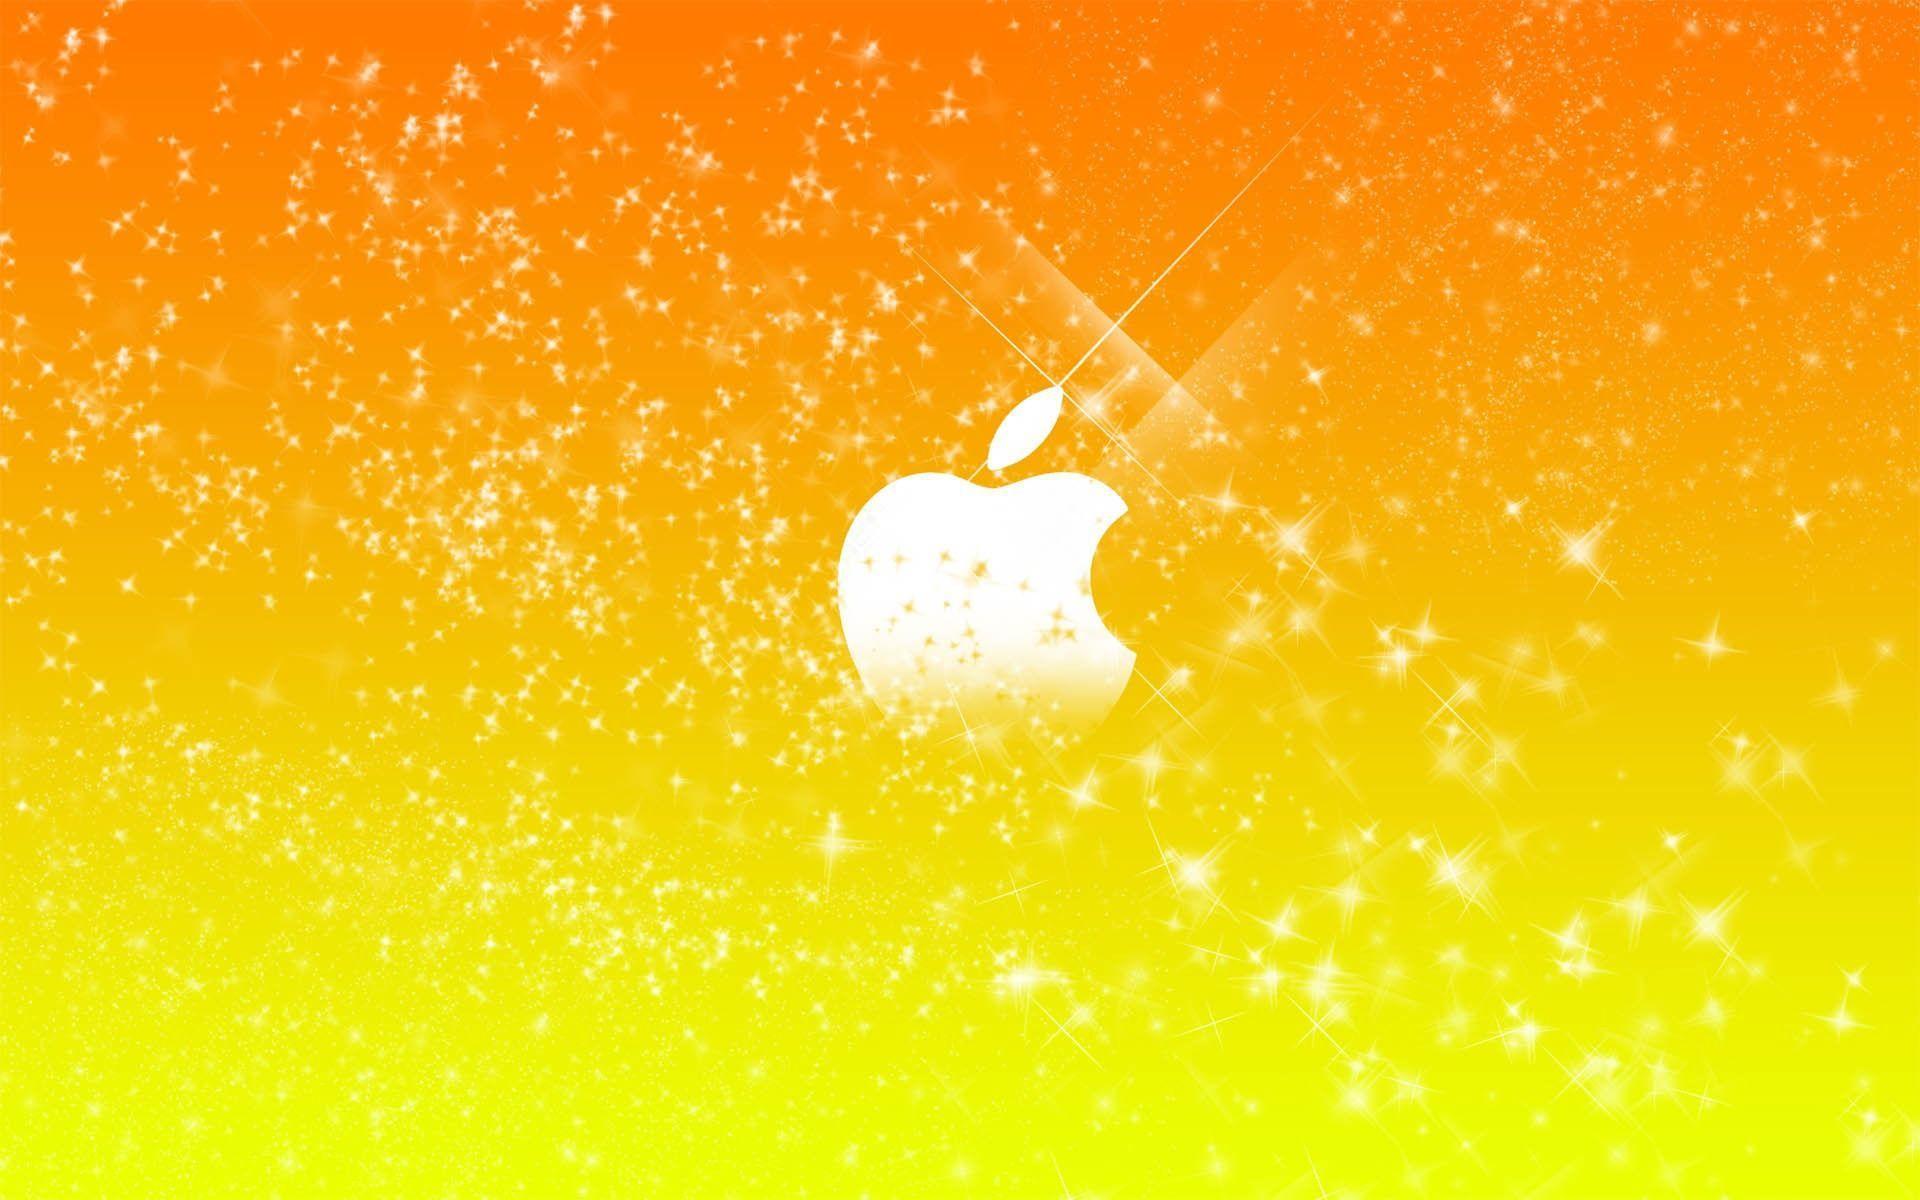 Sparkling Apple logo wallpaper #